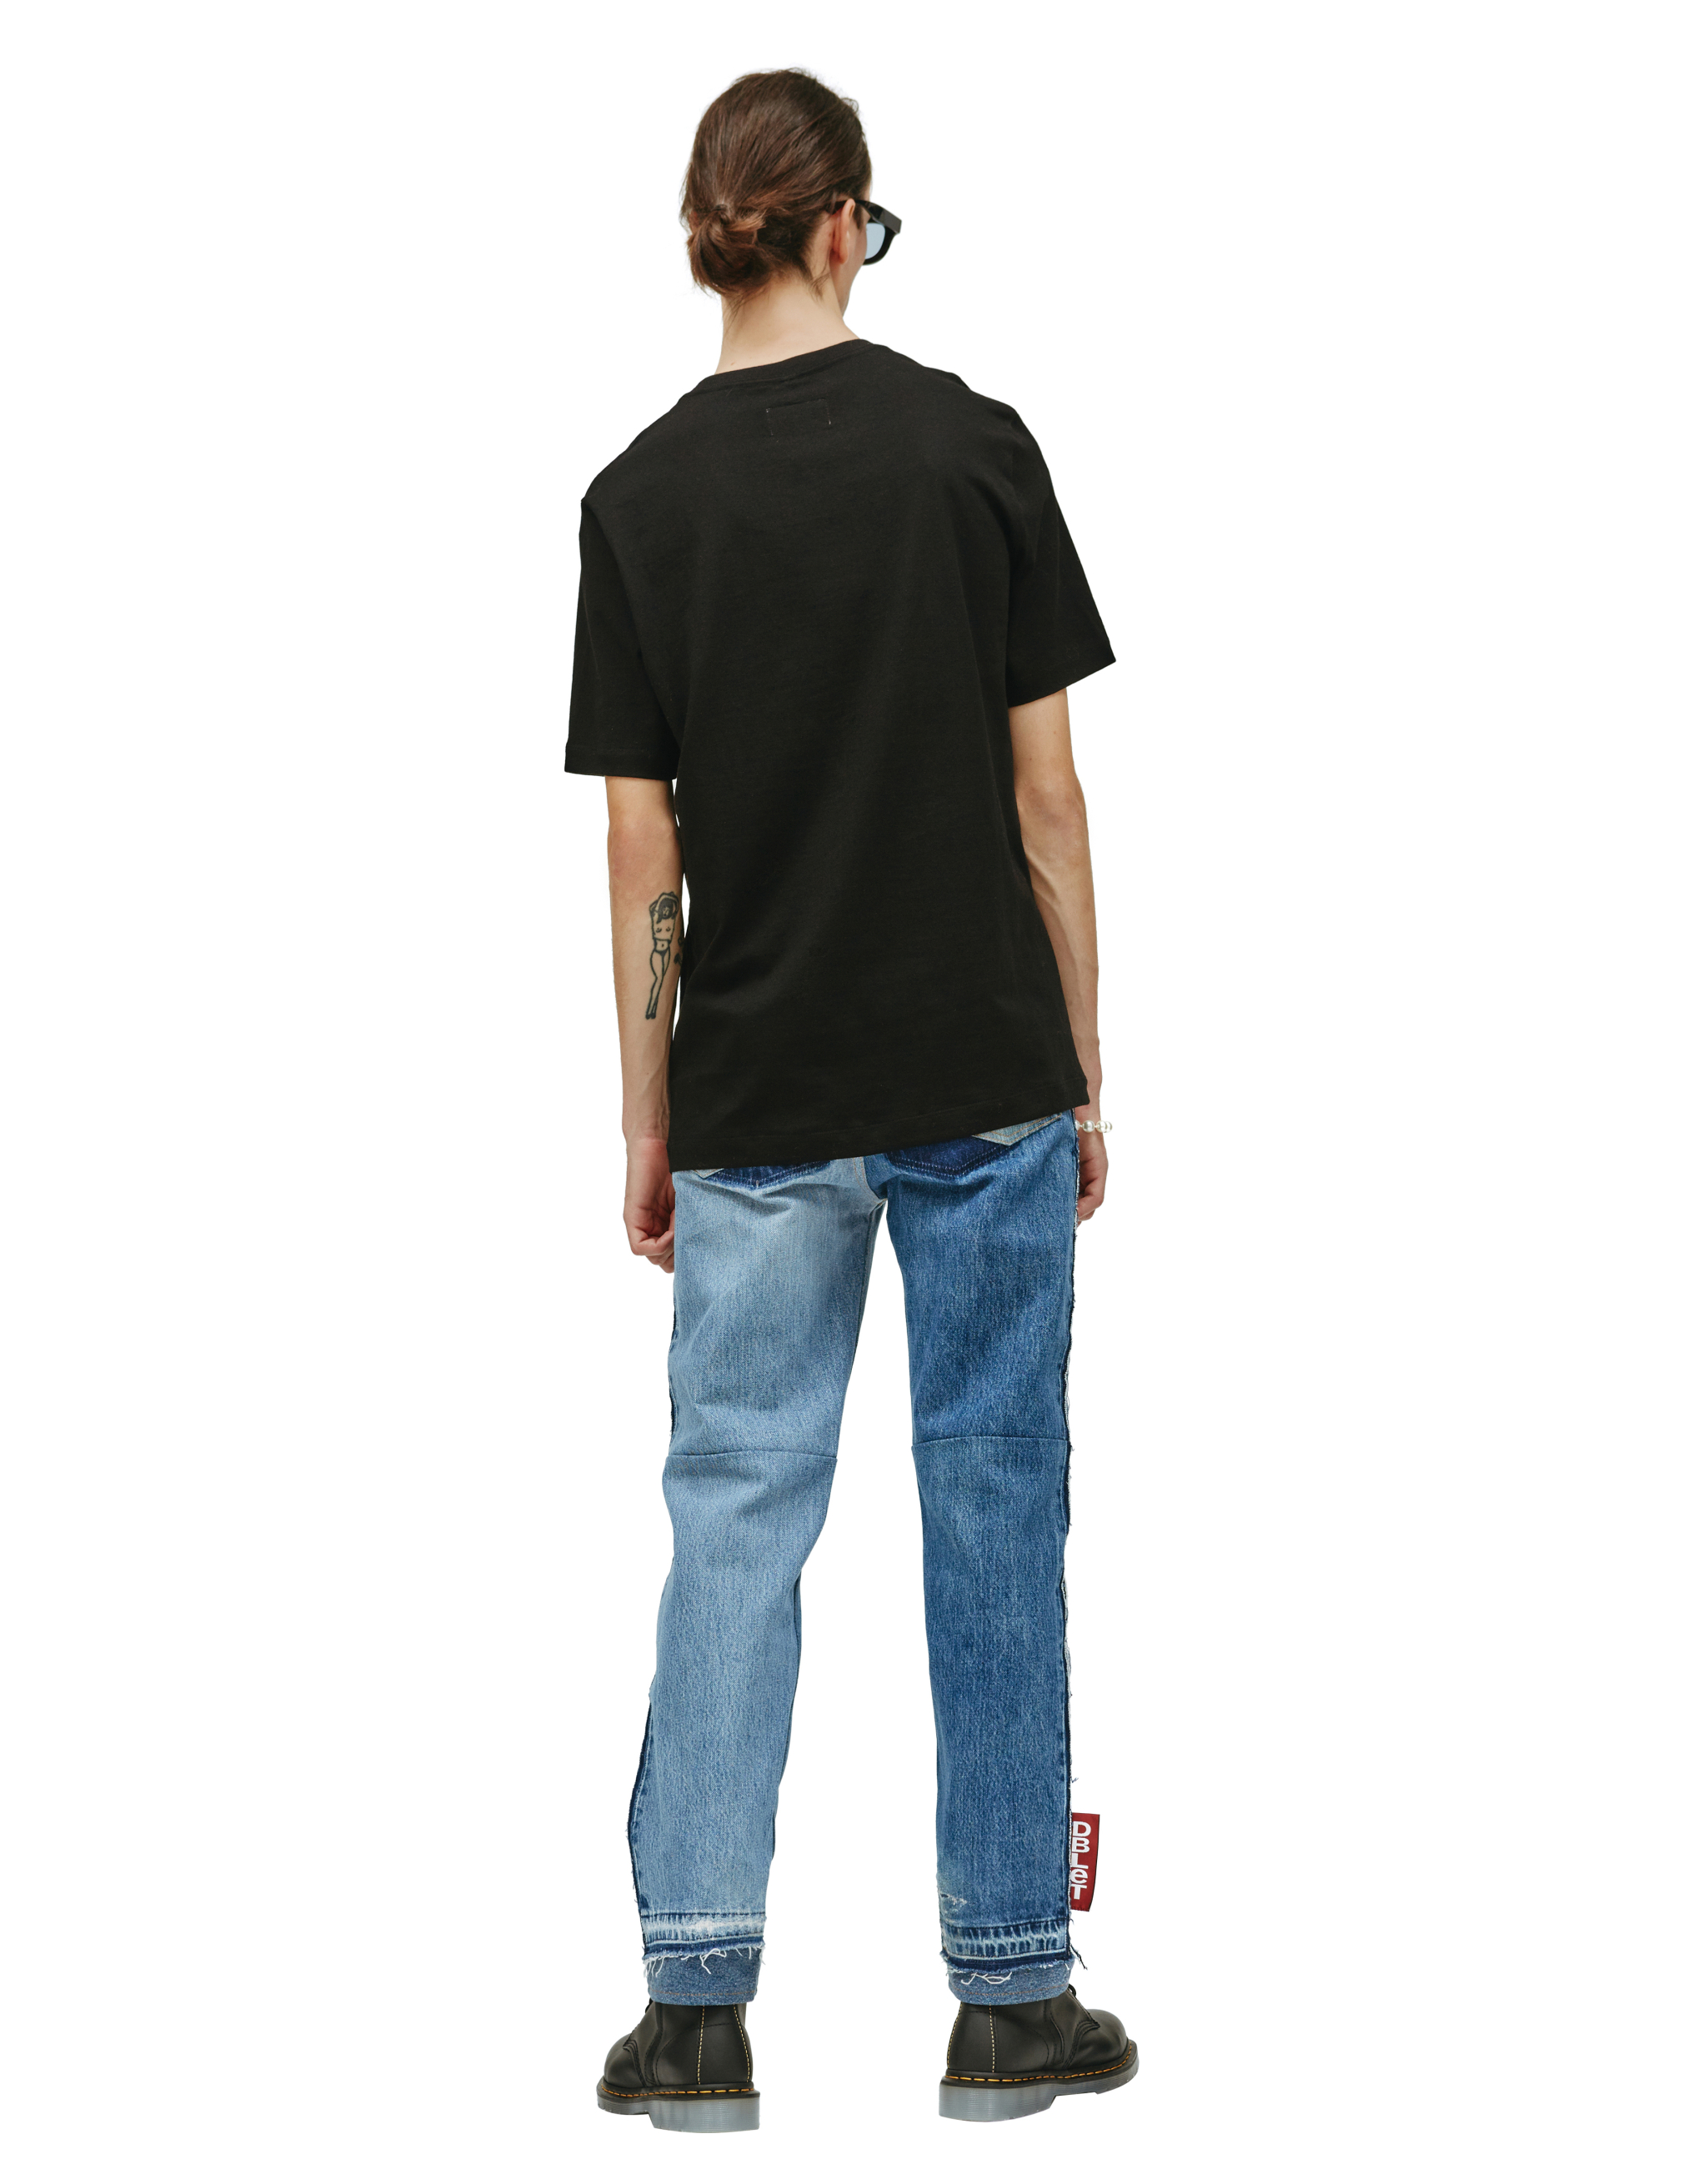 Хлопковая футболка с вышивкой Doublet 22AW33CS237/BLACK, размер M;L 22AW33CS237/BLACK - фото 3